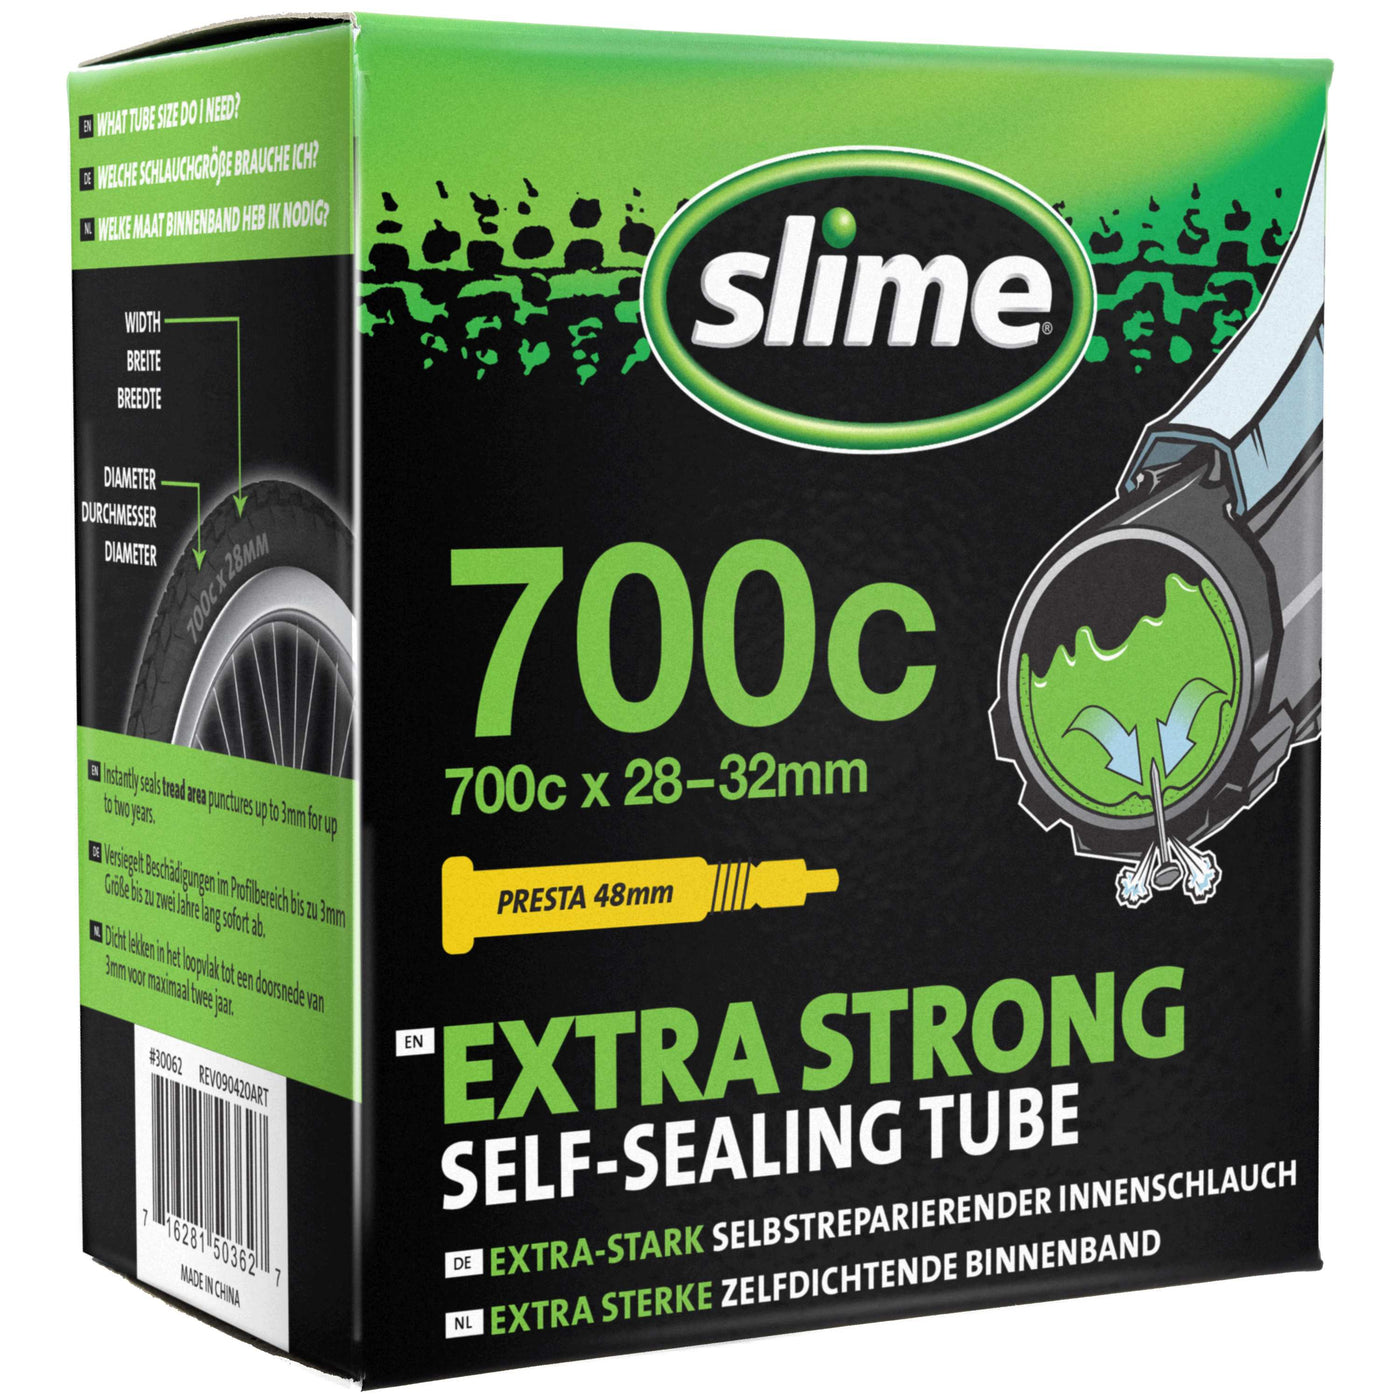 Slime Smart Tube - 700cc x 28-32 - Presta Valve